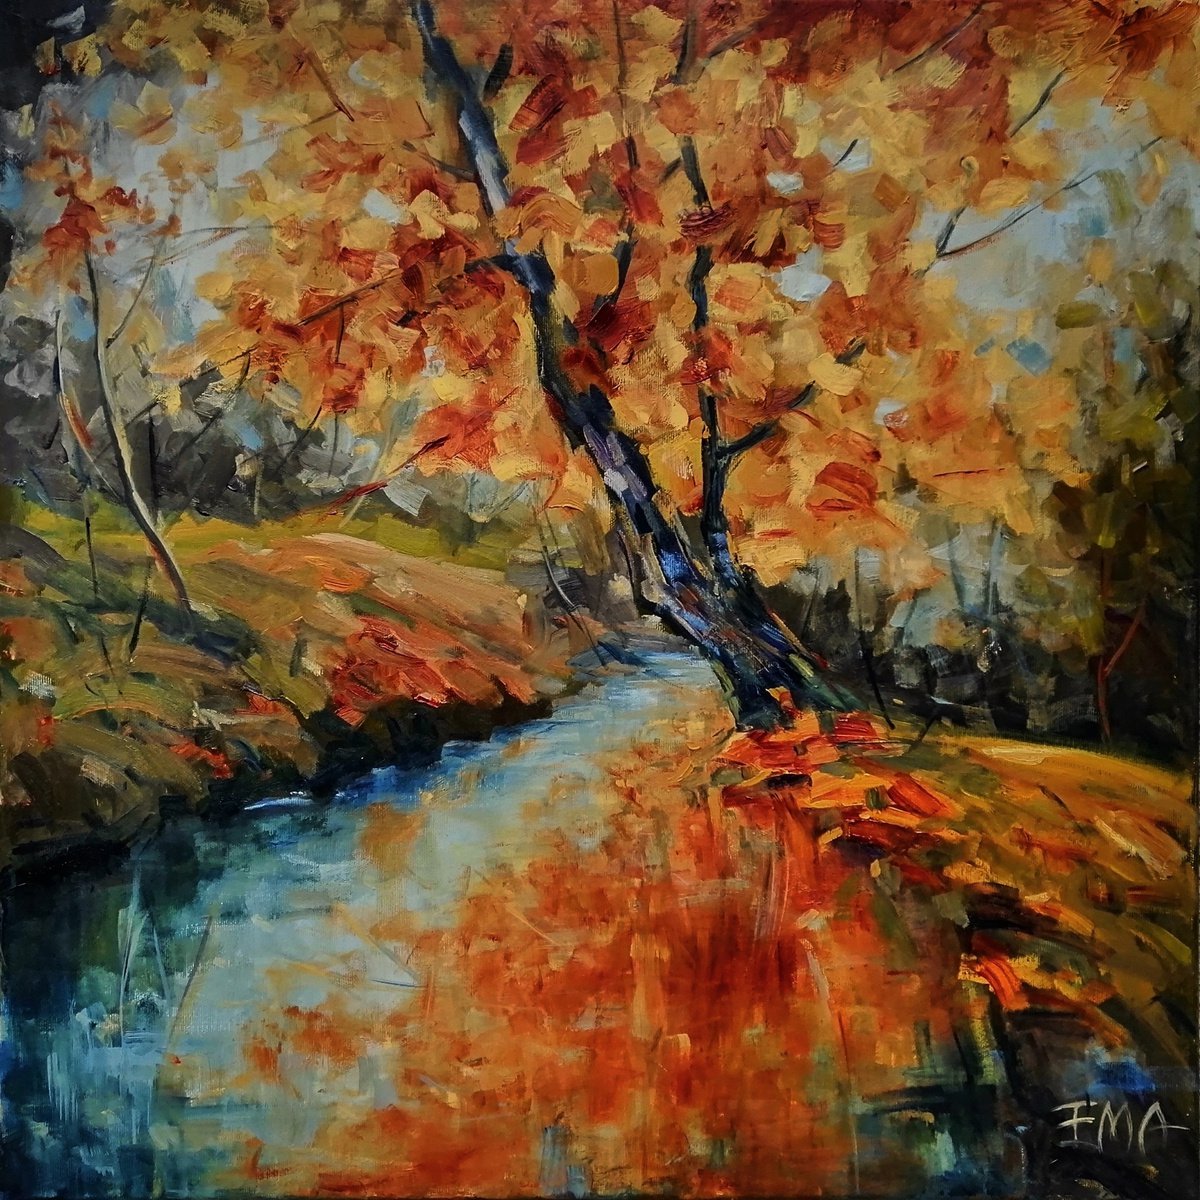 THE RIVER KEEPER, 60x60cm, autumn trees landscape by Emilia Milcheva